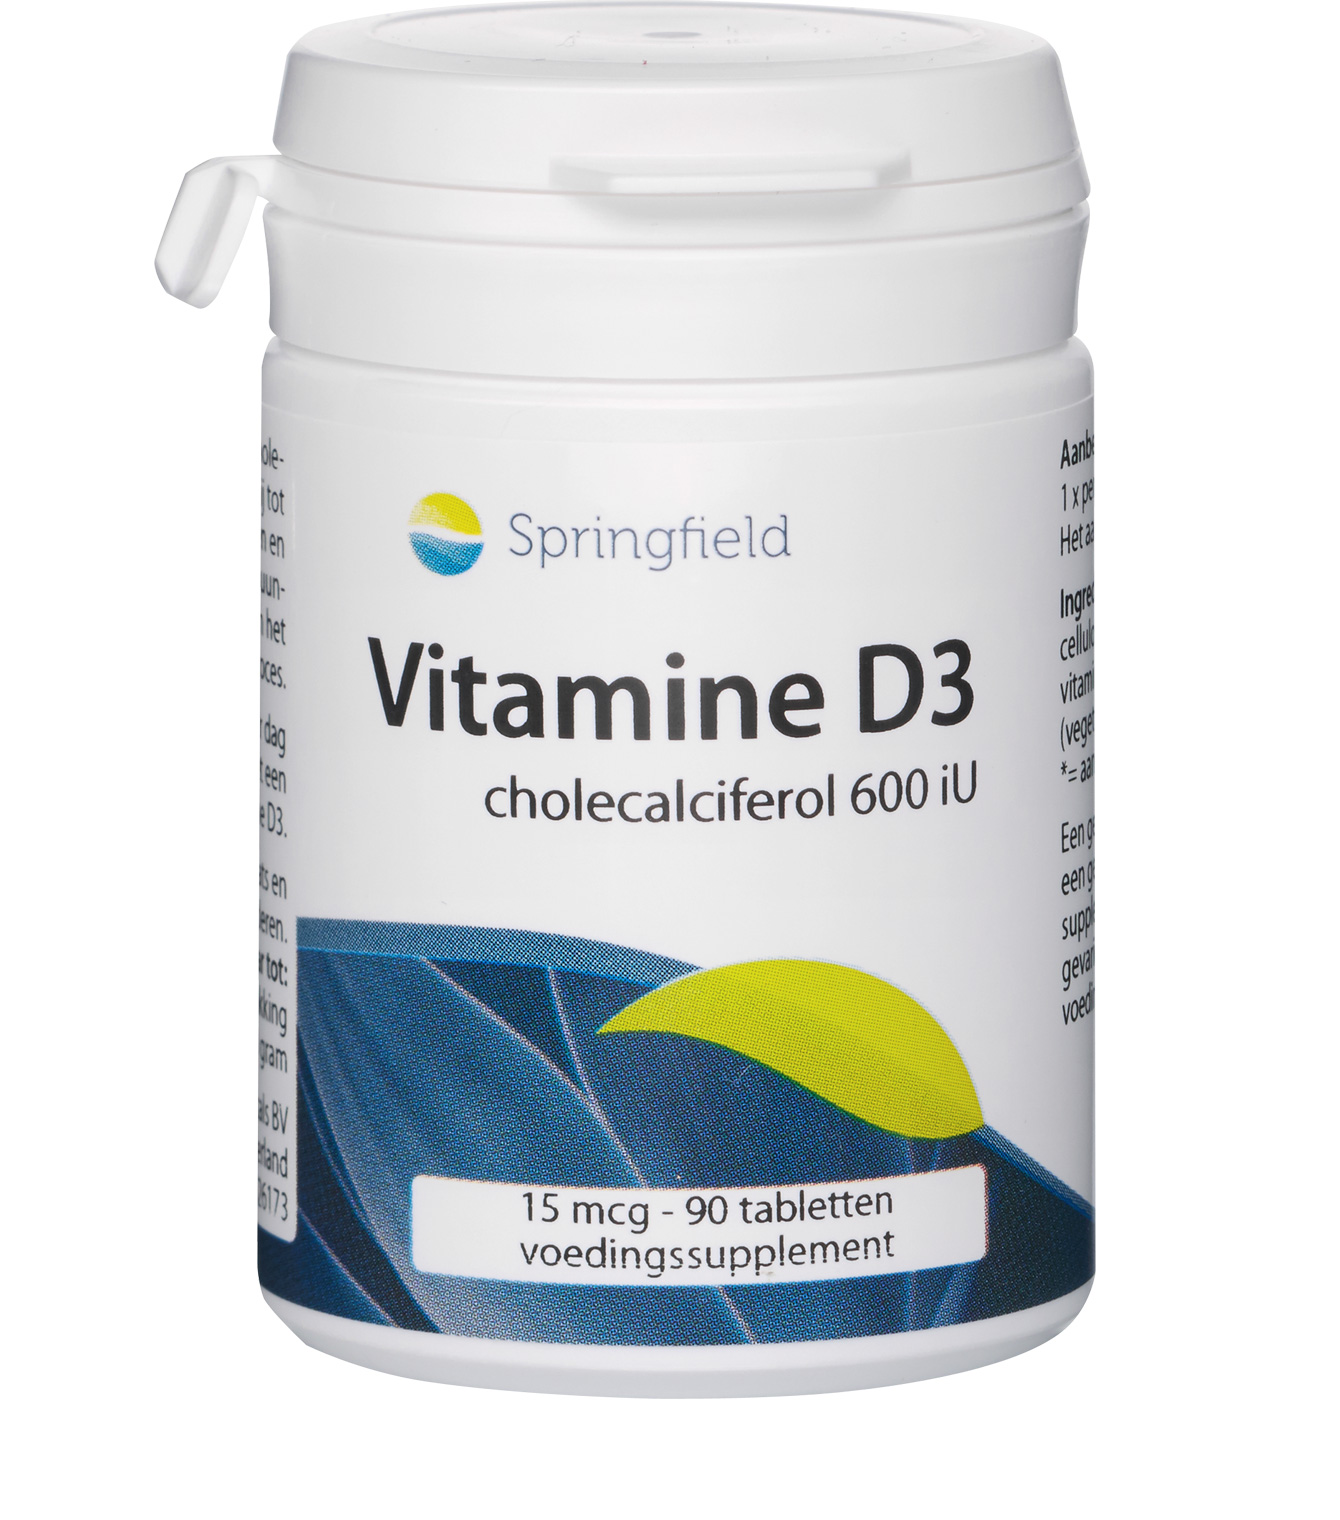 Vitamine D3 - Cholecalciferol